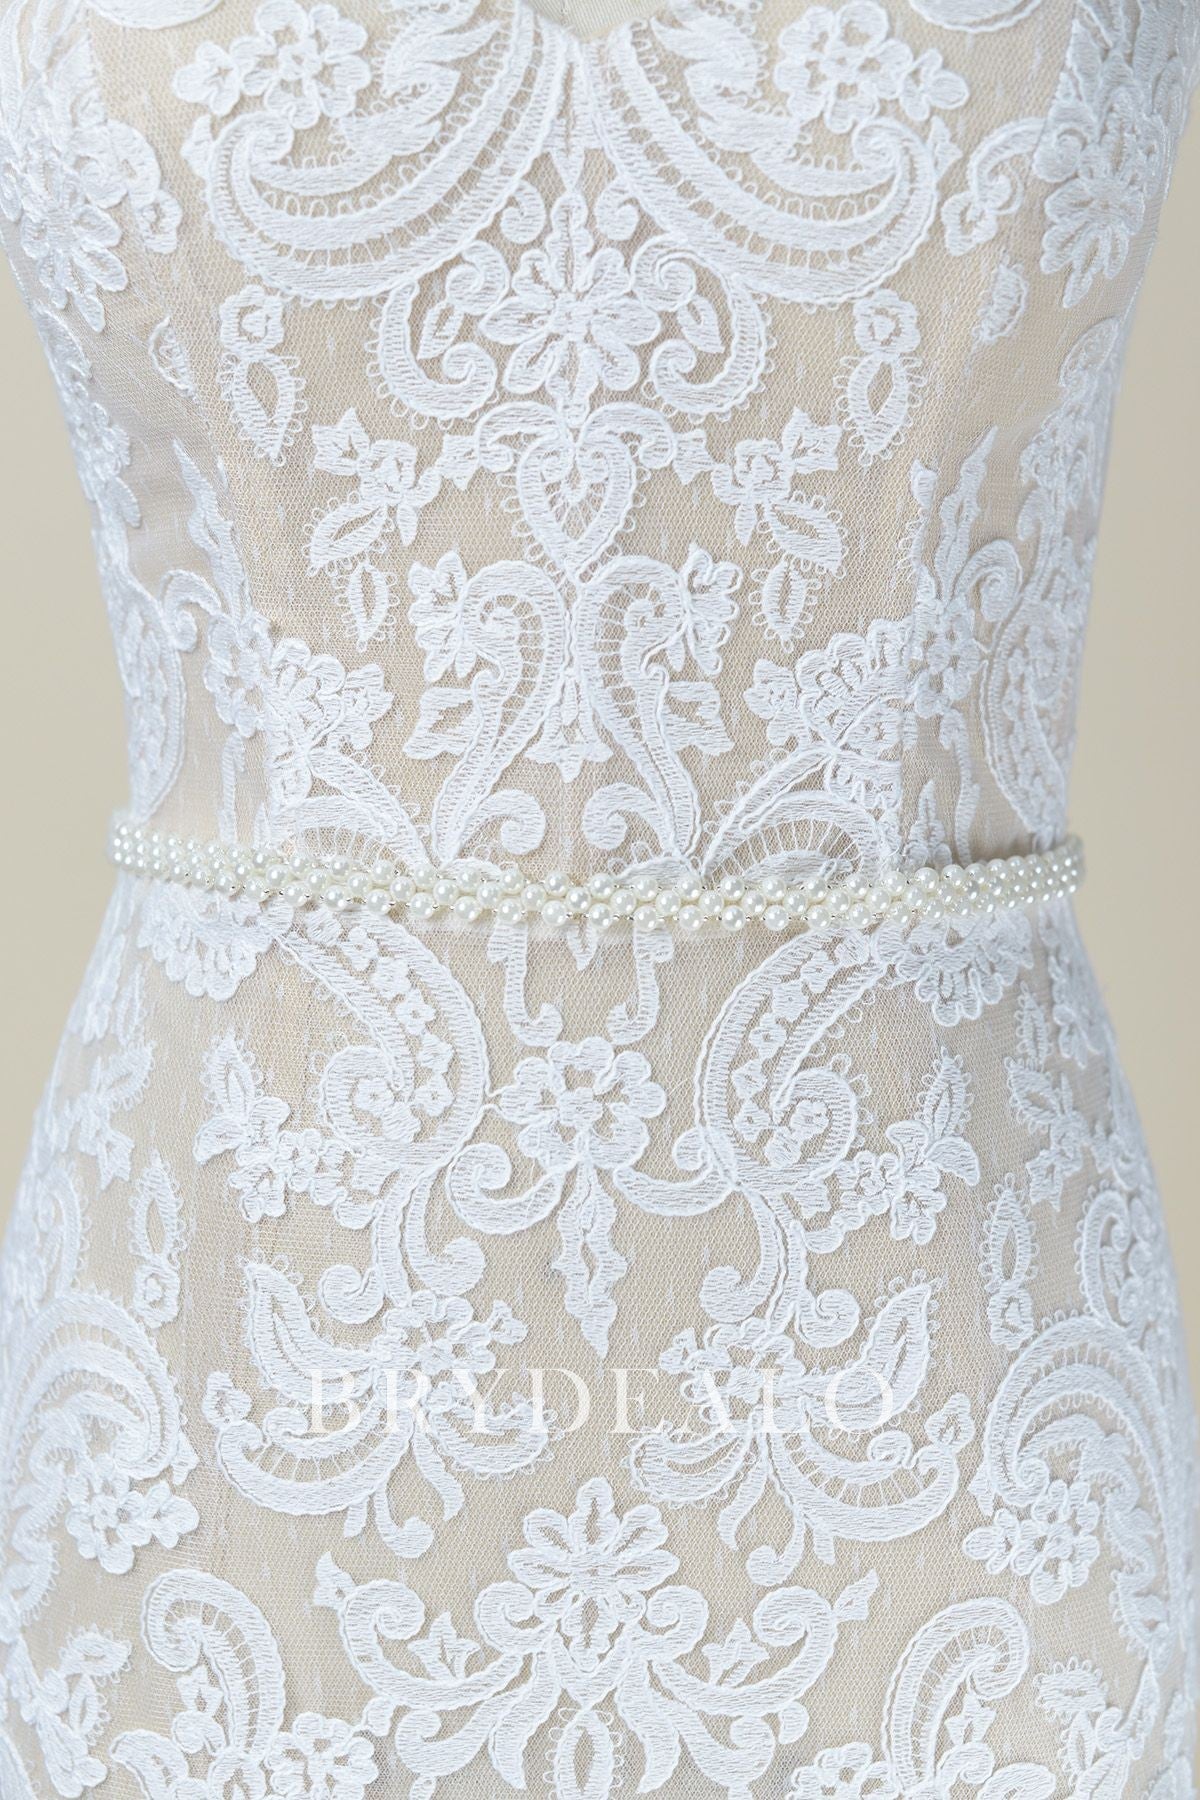 Fashionable Exquisite Pearls Bridal Sash Belt Online